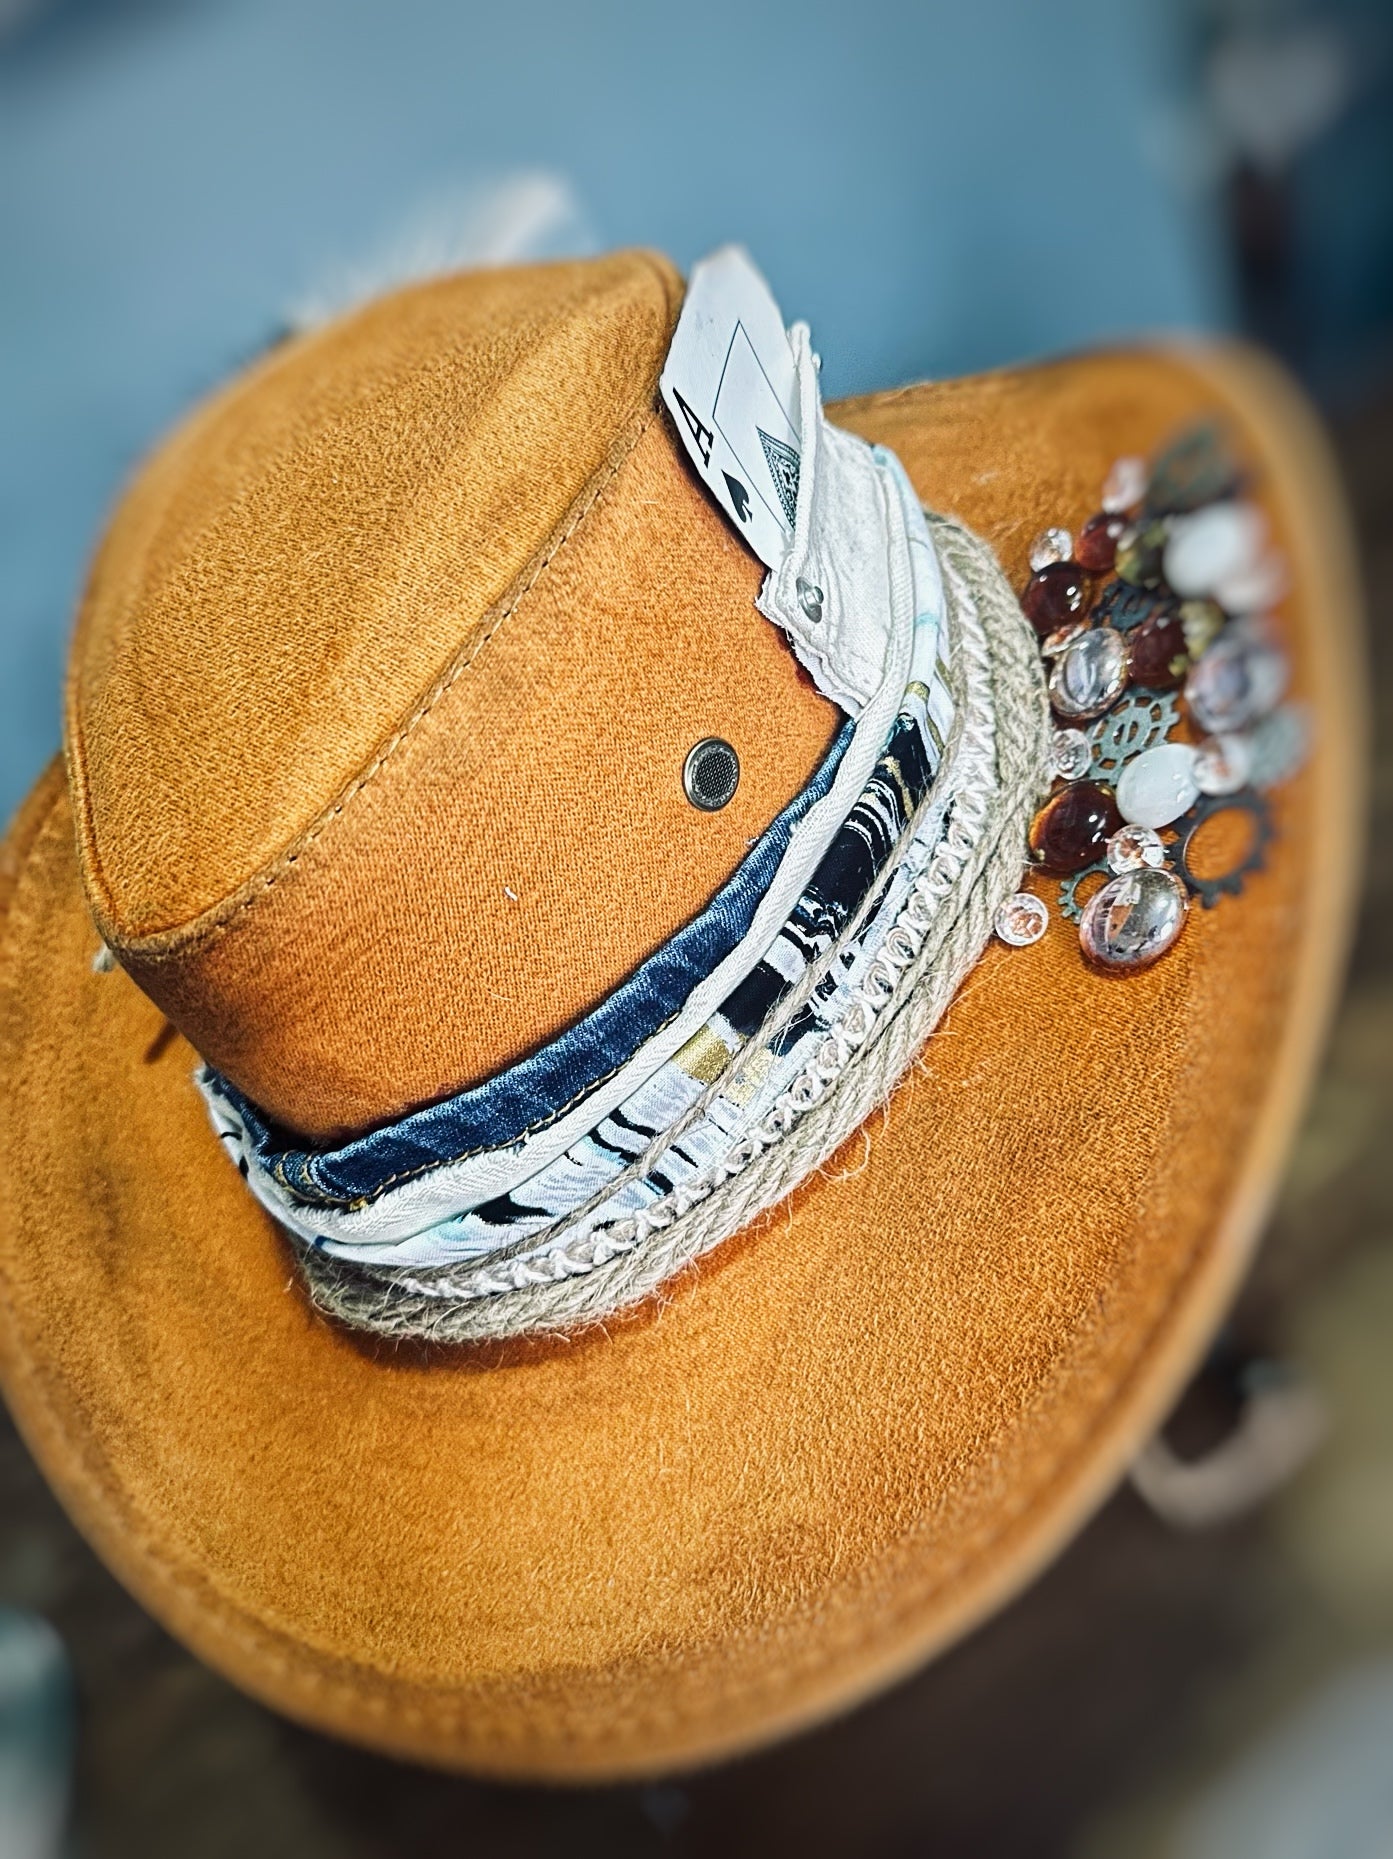 Blue and Tan cowboy hat